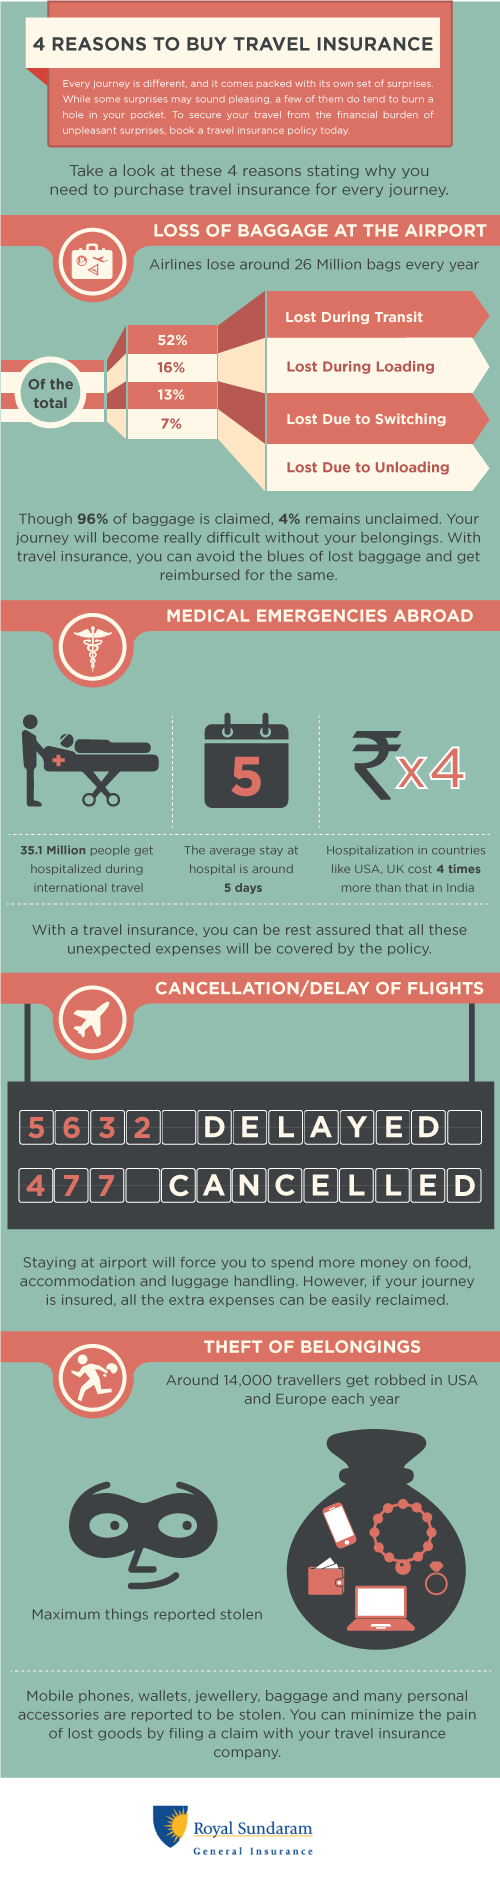 4 Reasons to Buy Travel Insurance